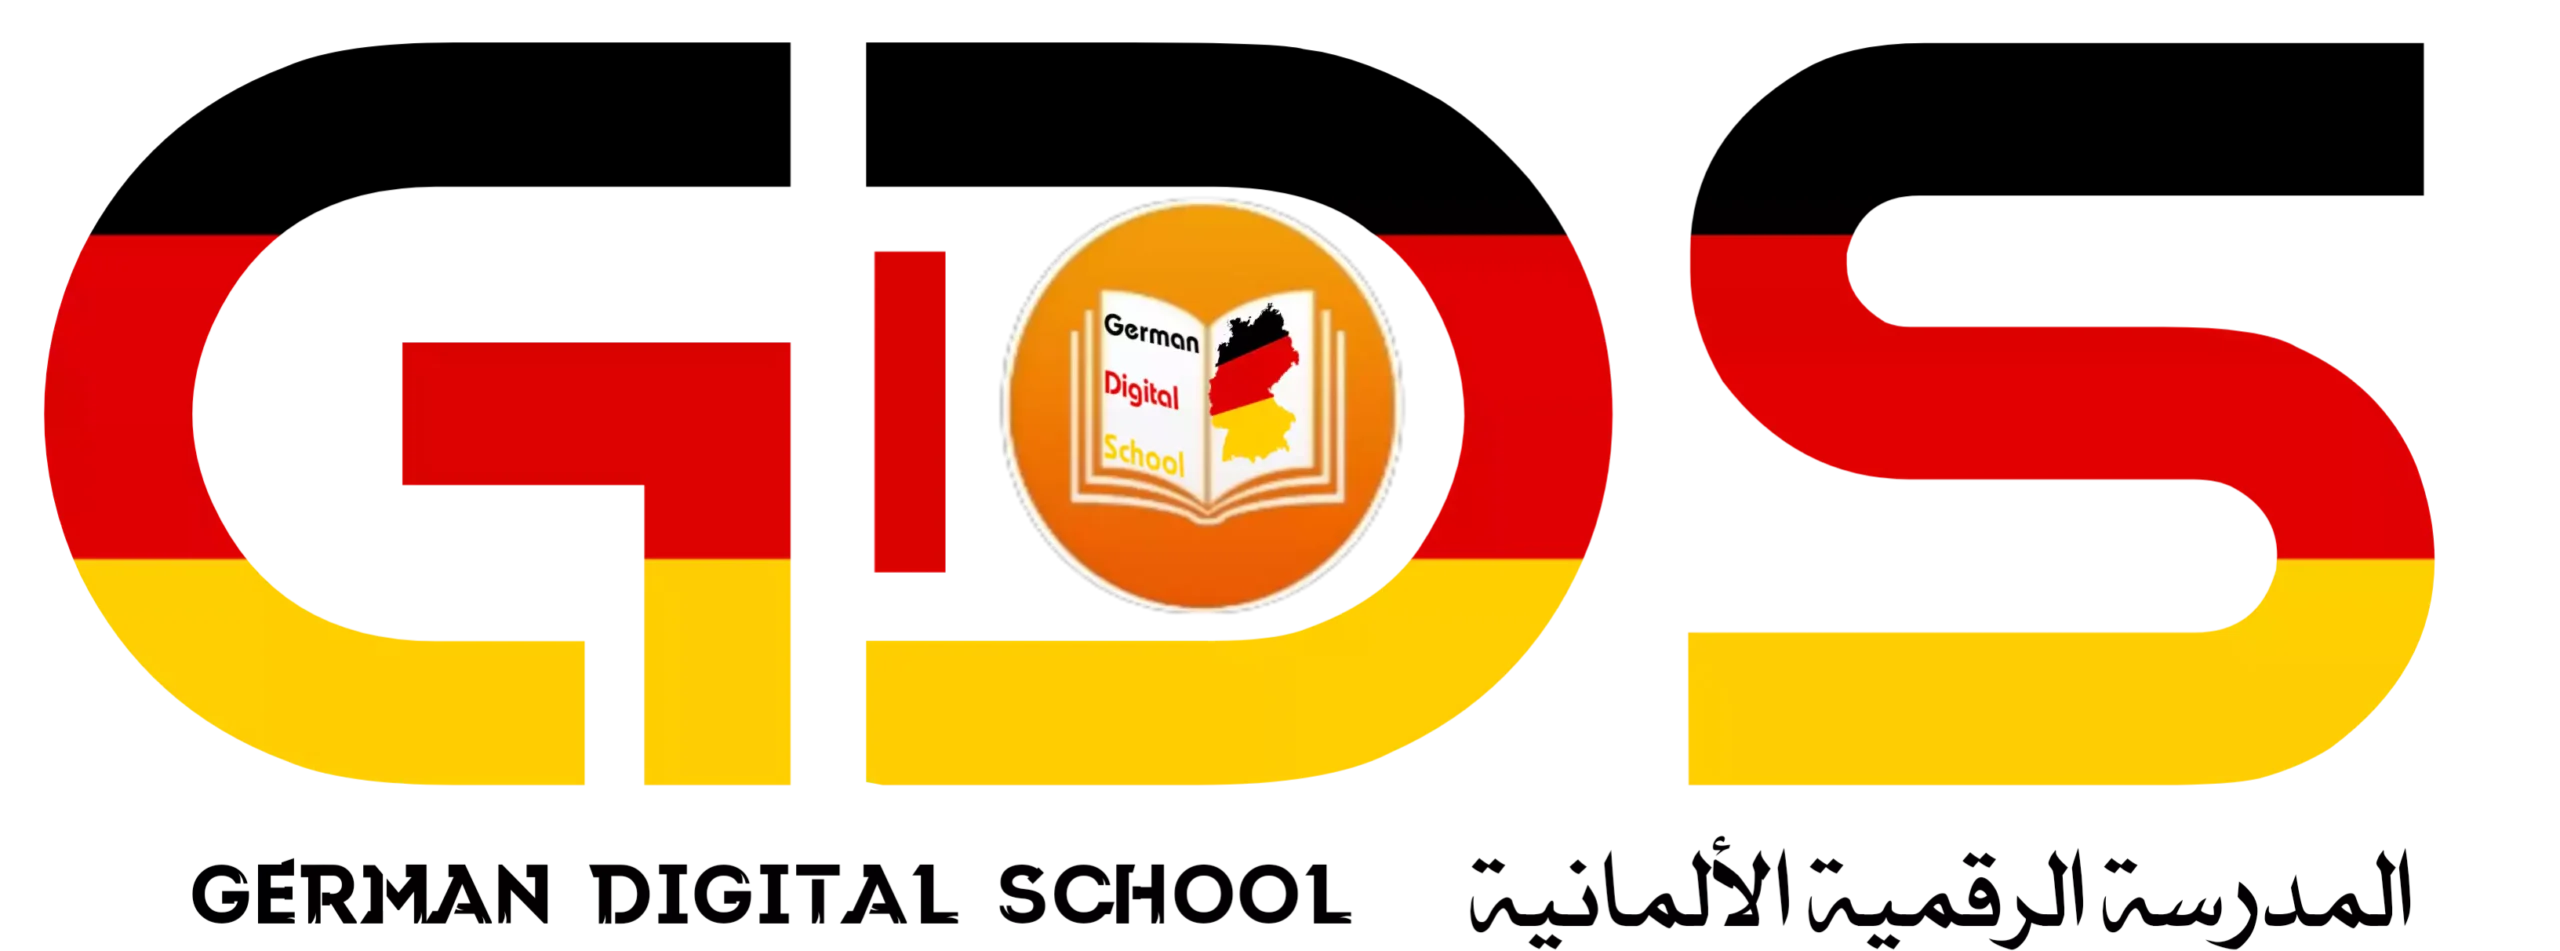 german digital school logo